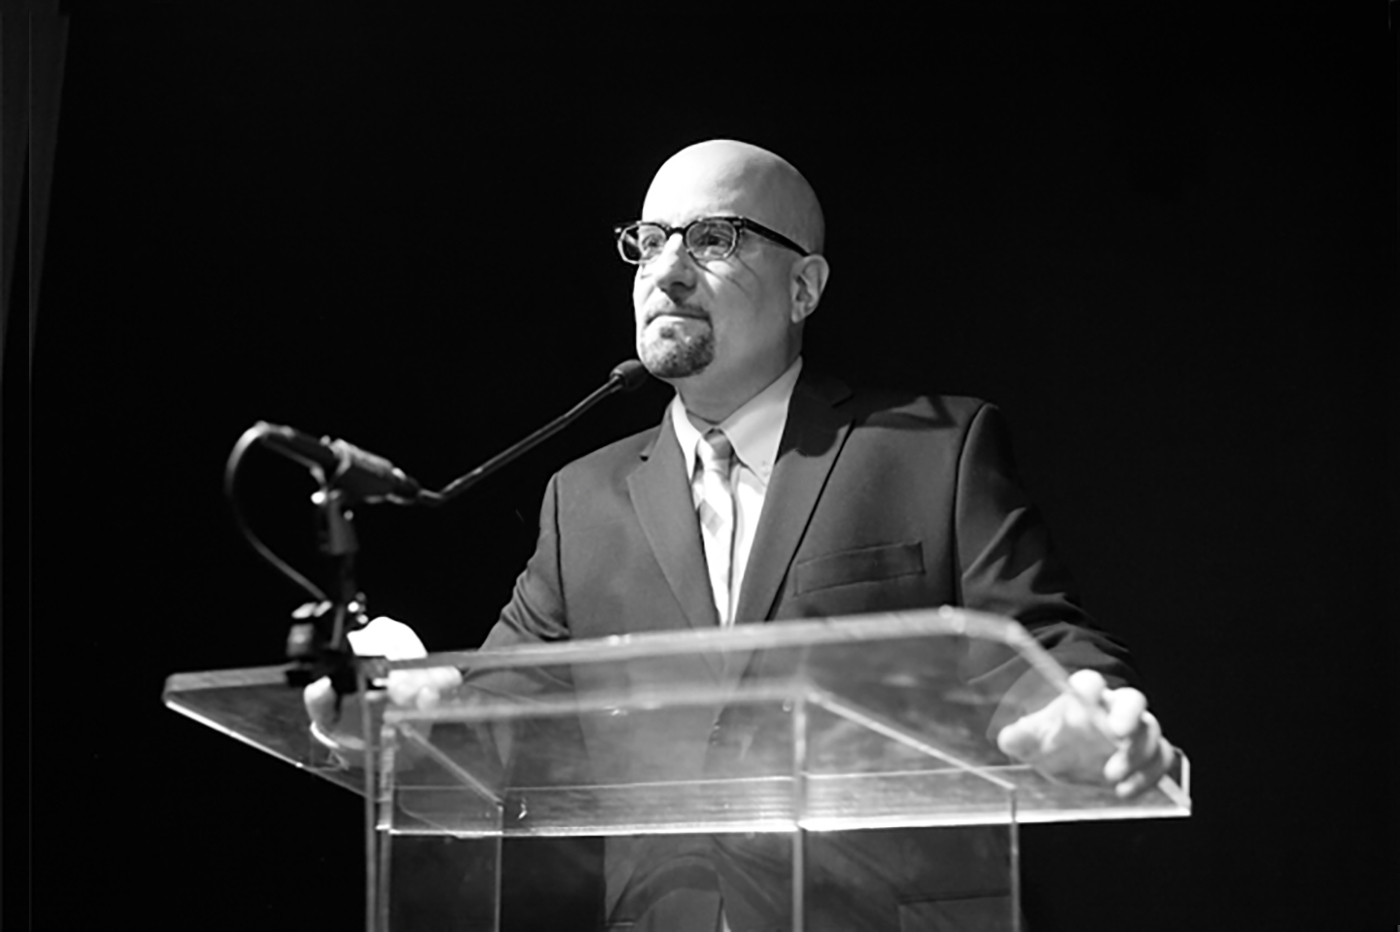 Filmmaker Daniel Azarian speaking at the 2014 Wildlife Conservation Film Festival in New York City